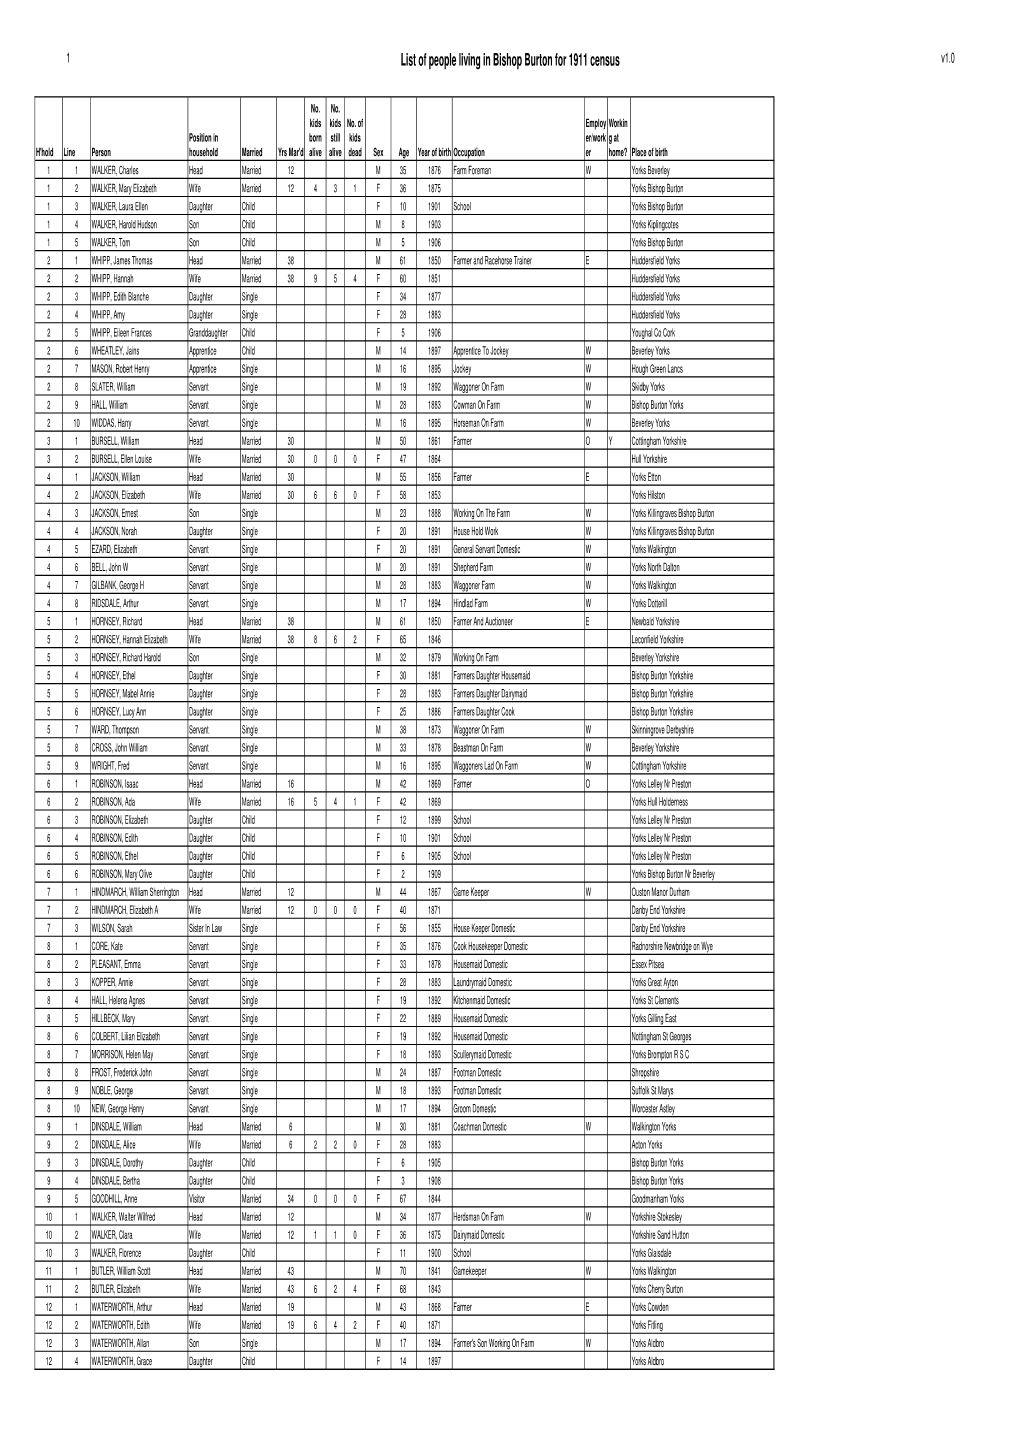 1911 Census List